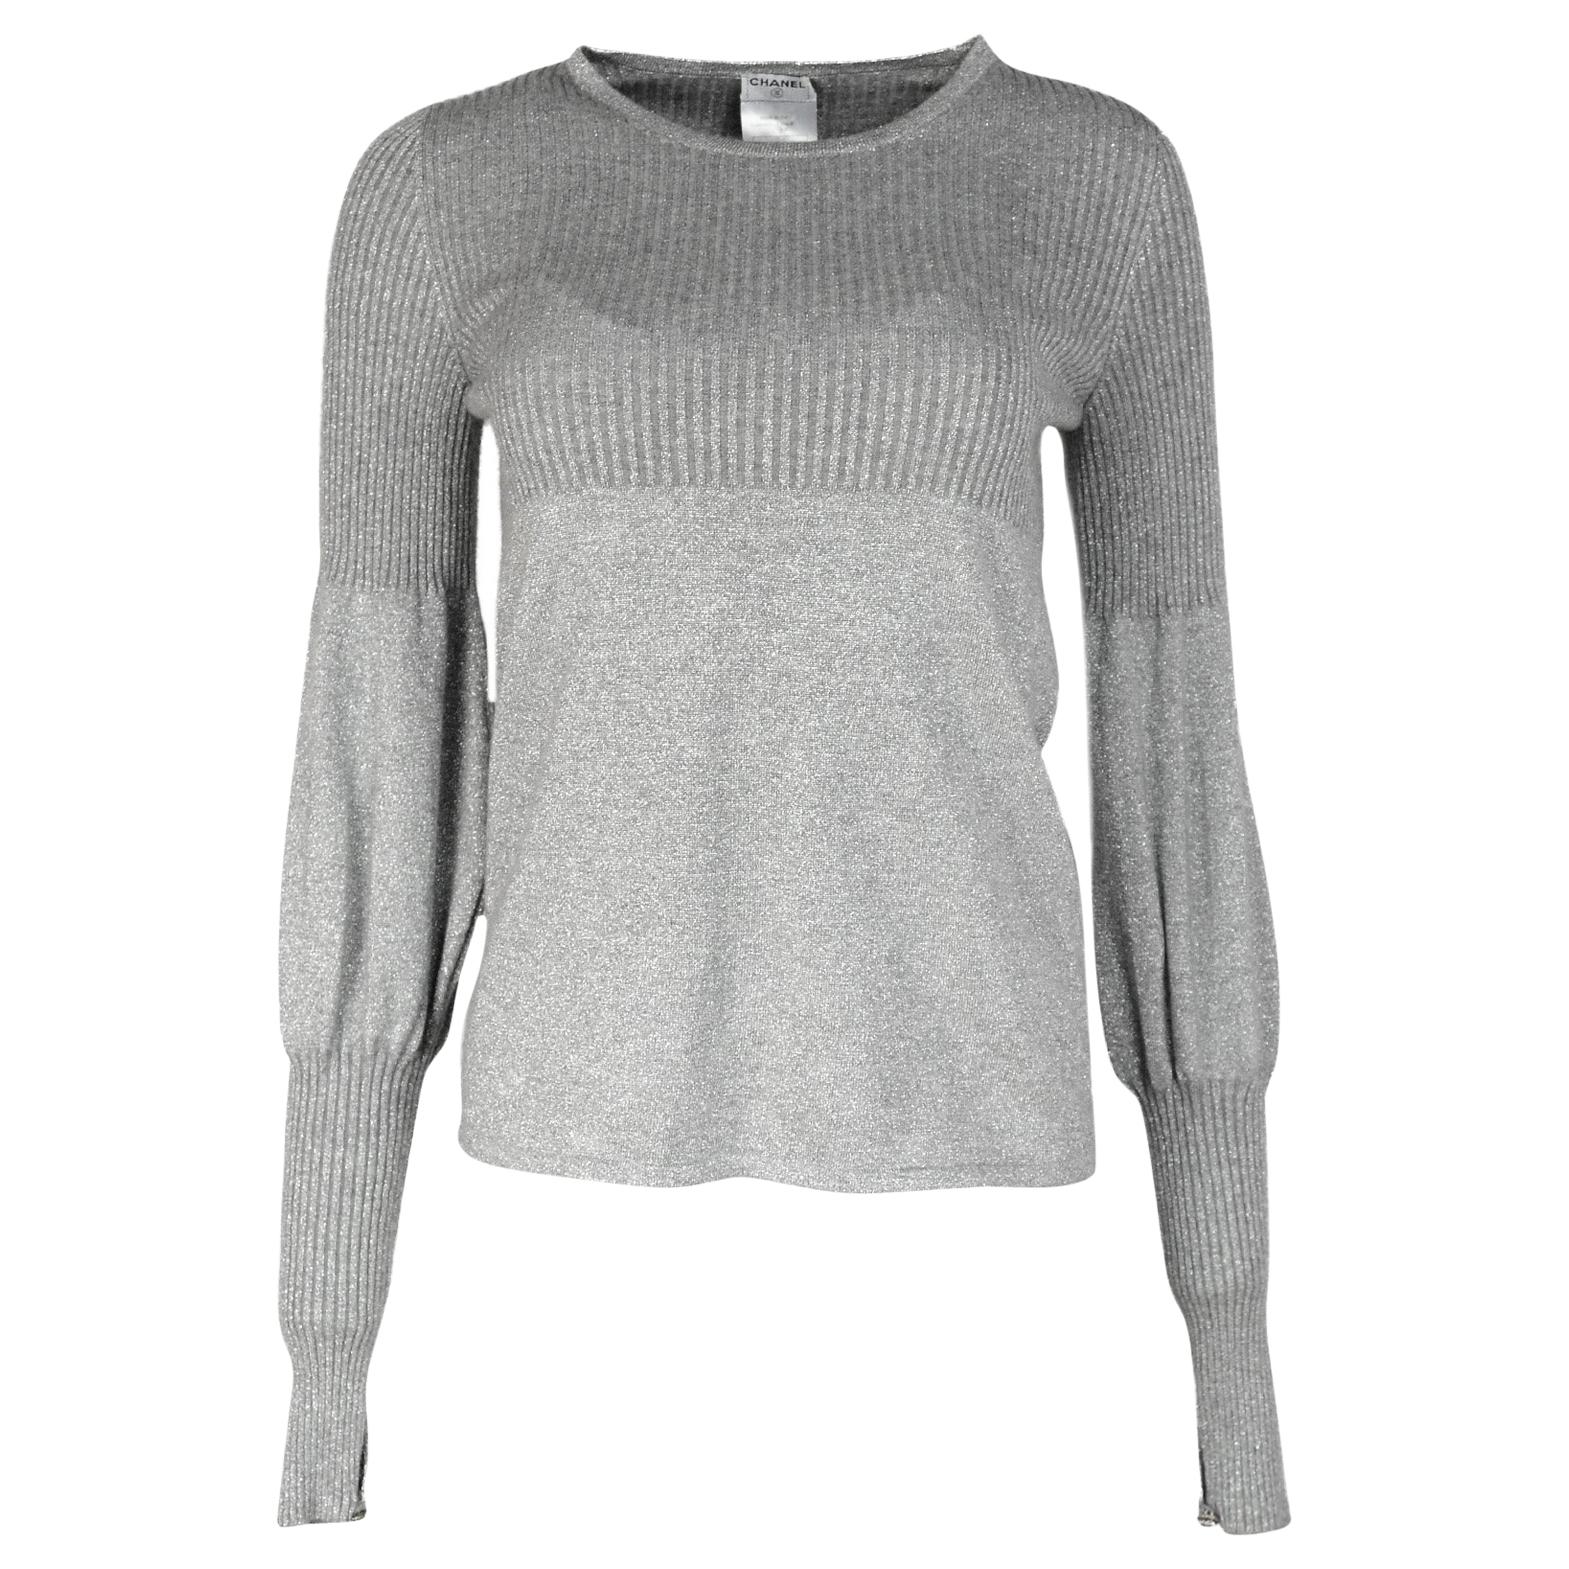 Chanel Grey Cashmere/Cotton Glitter Long Balloon Sleeve Sweater Sz 36